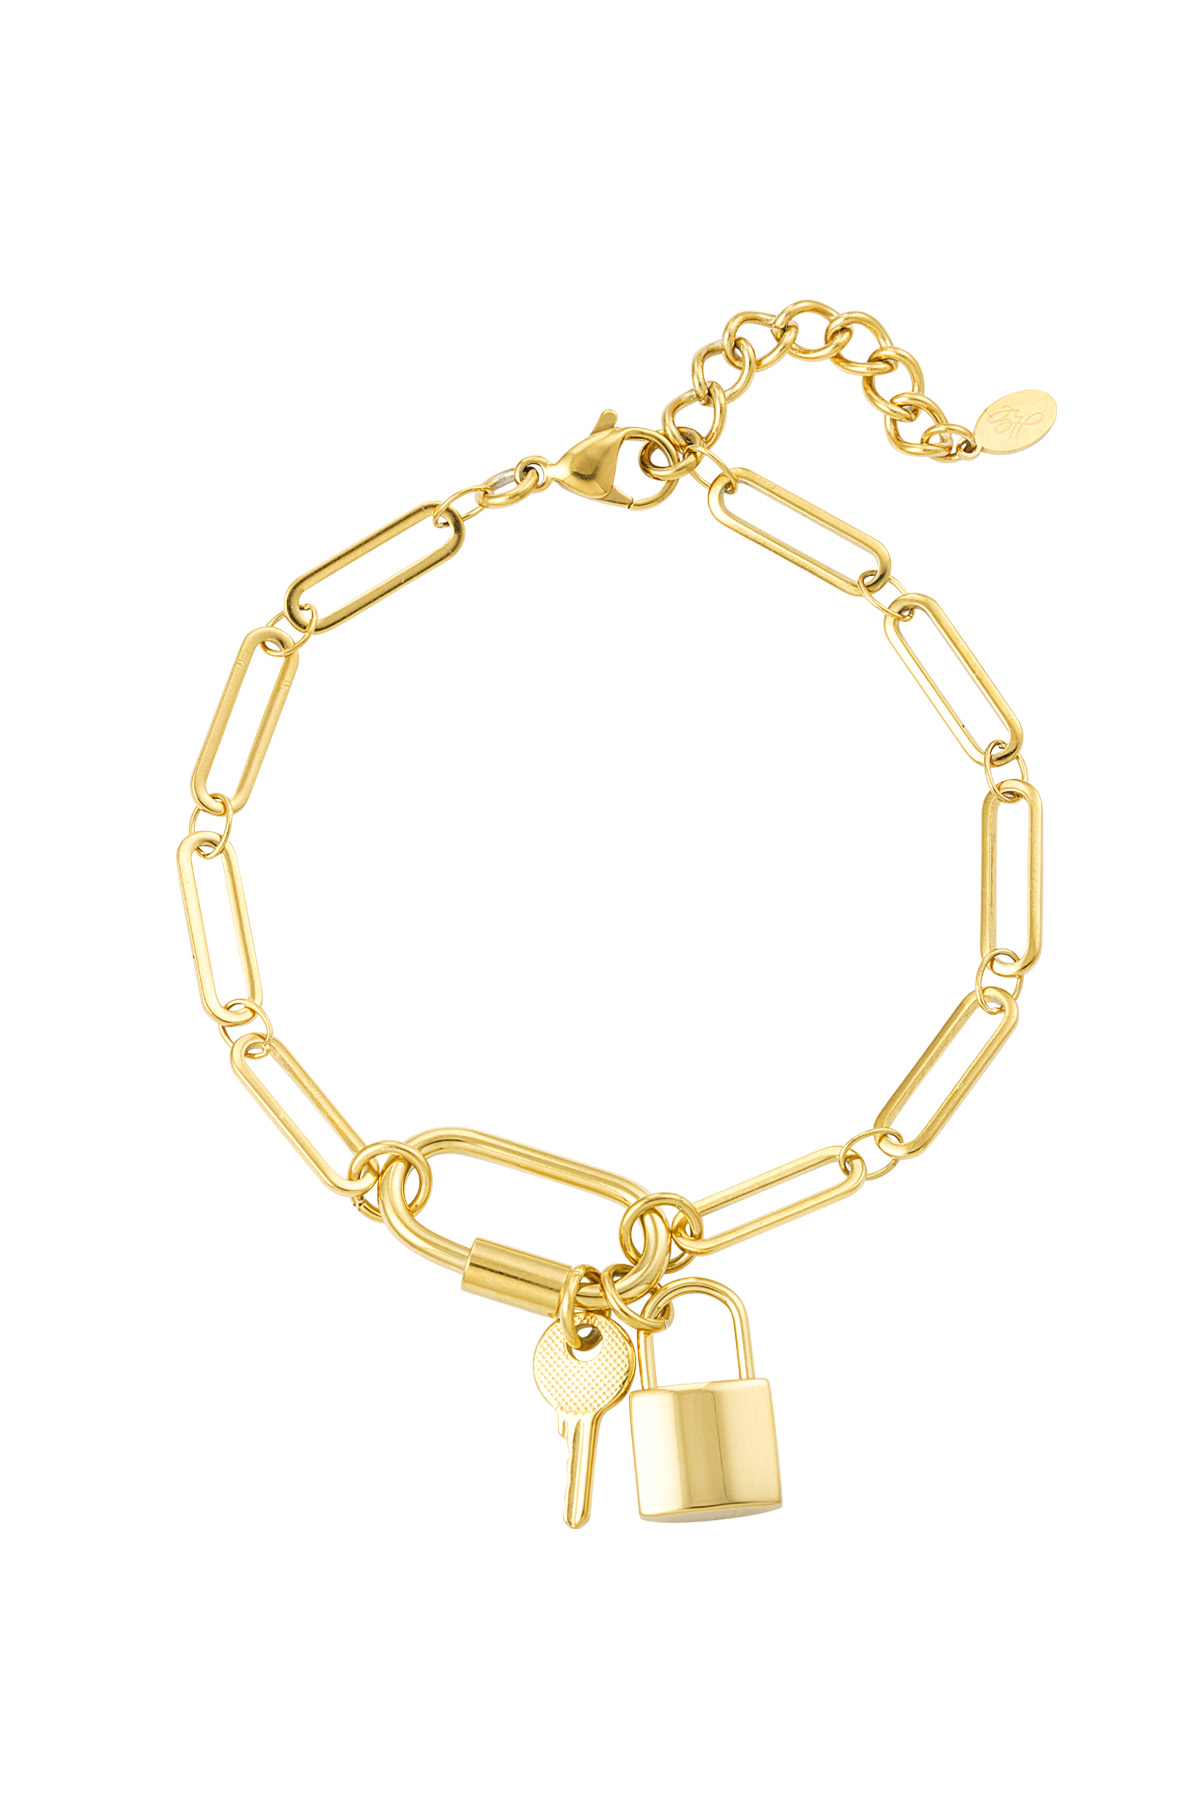 Bracelet links key & lock - gold 